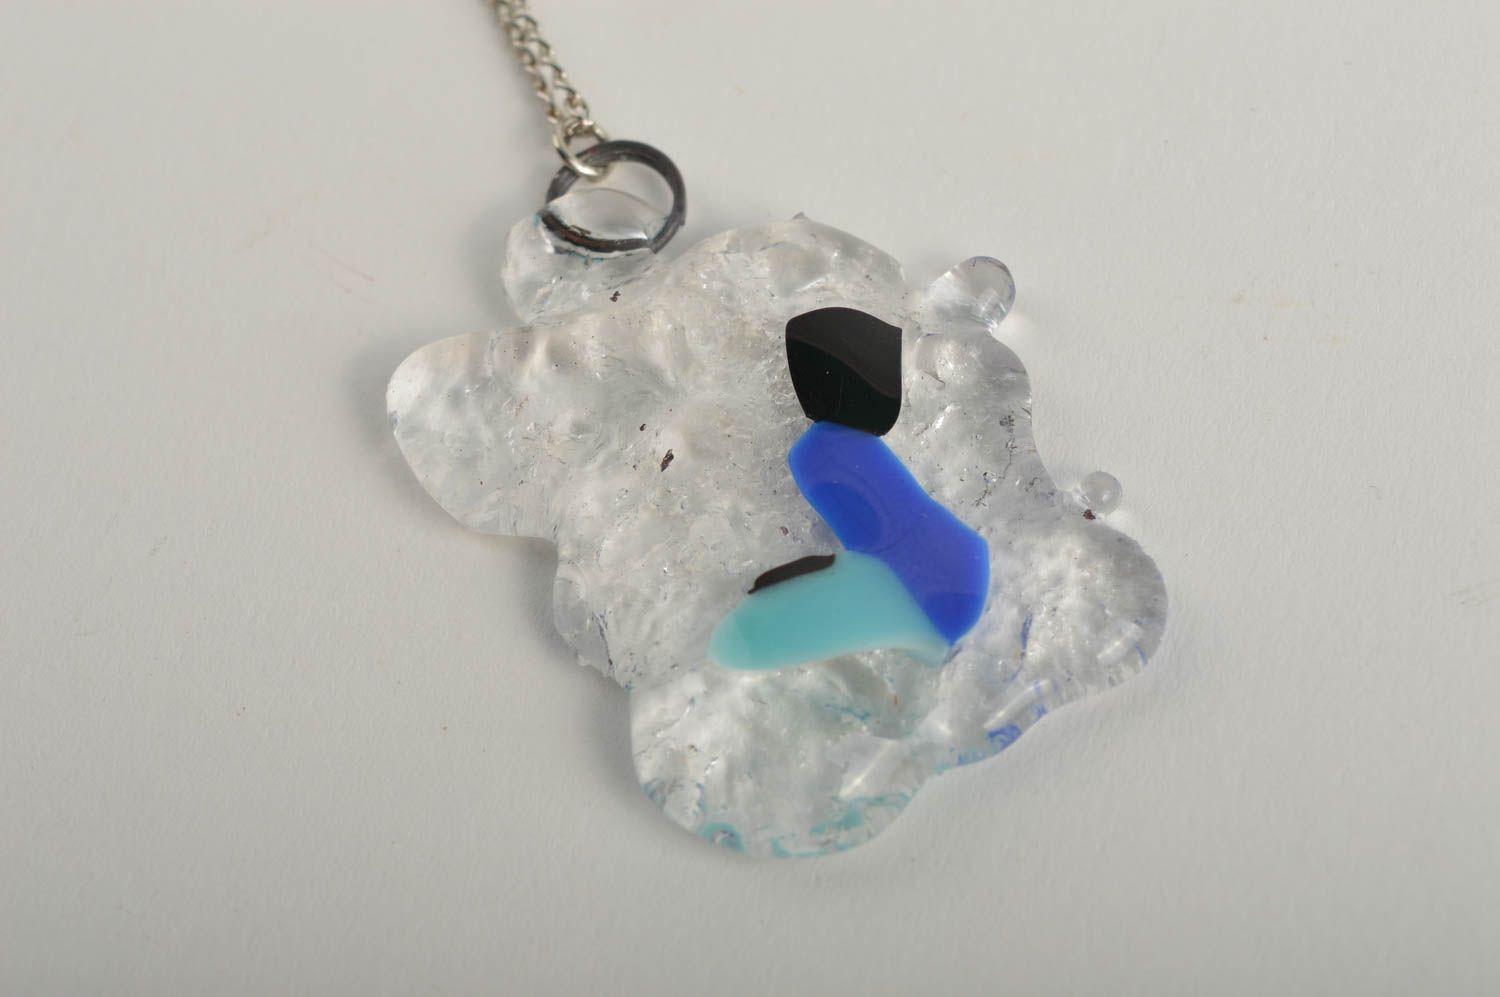 Unusual handmade glass pendant glass art artisan jewelry designs small gifts photo 4